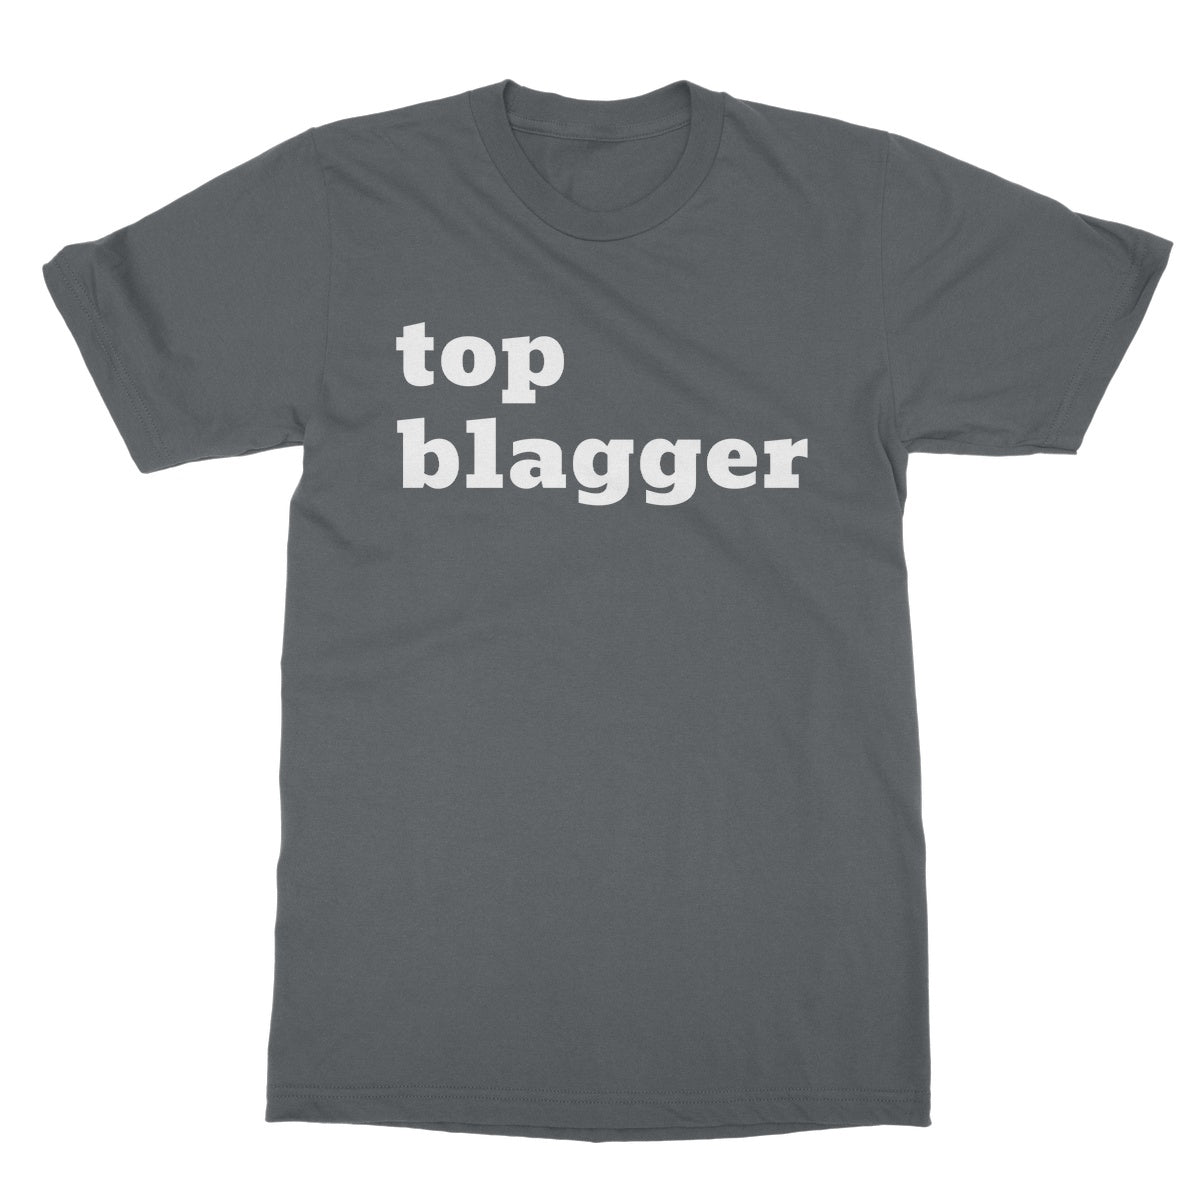 top blagger t shirt grey